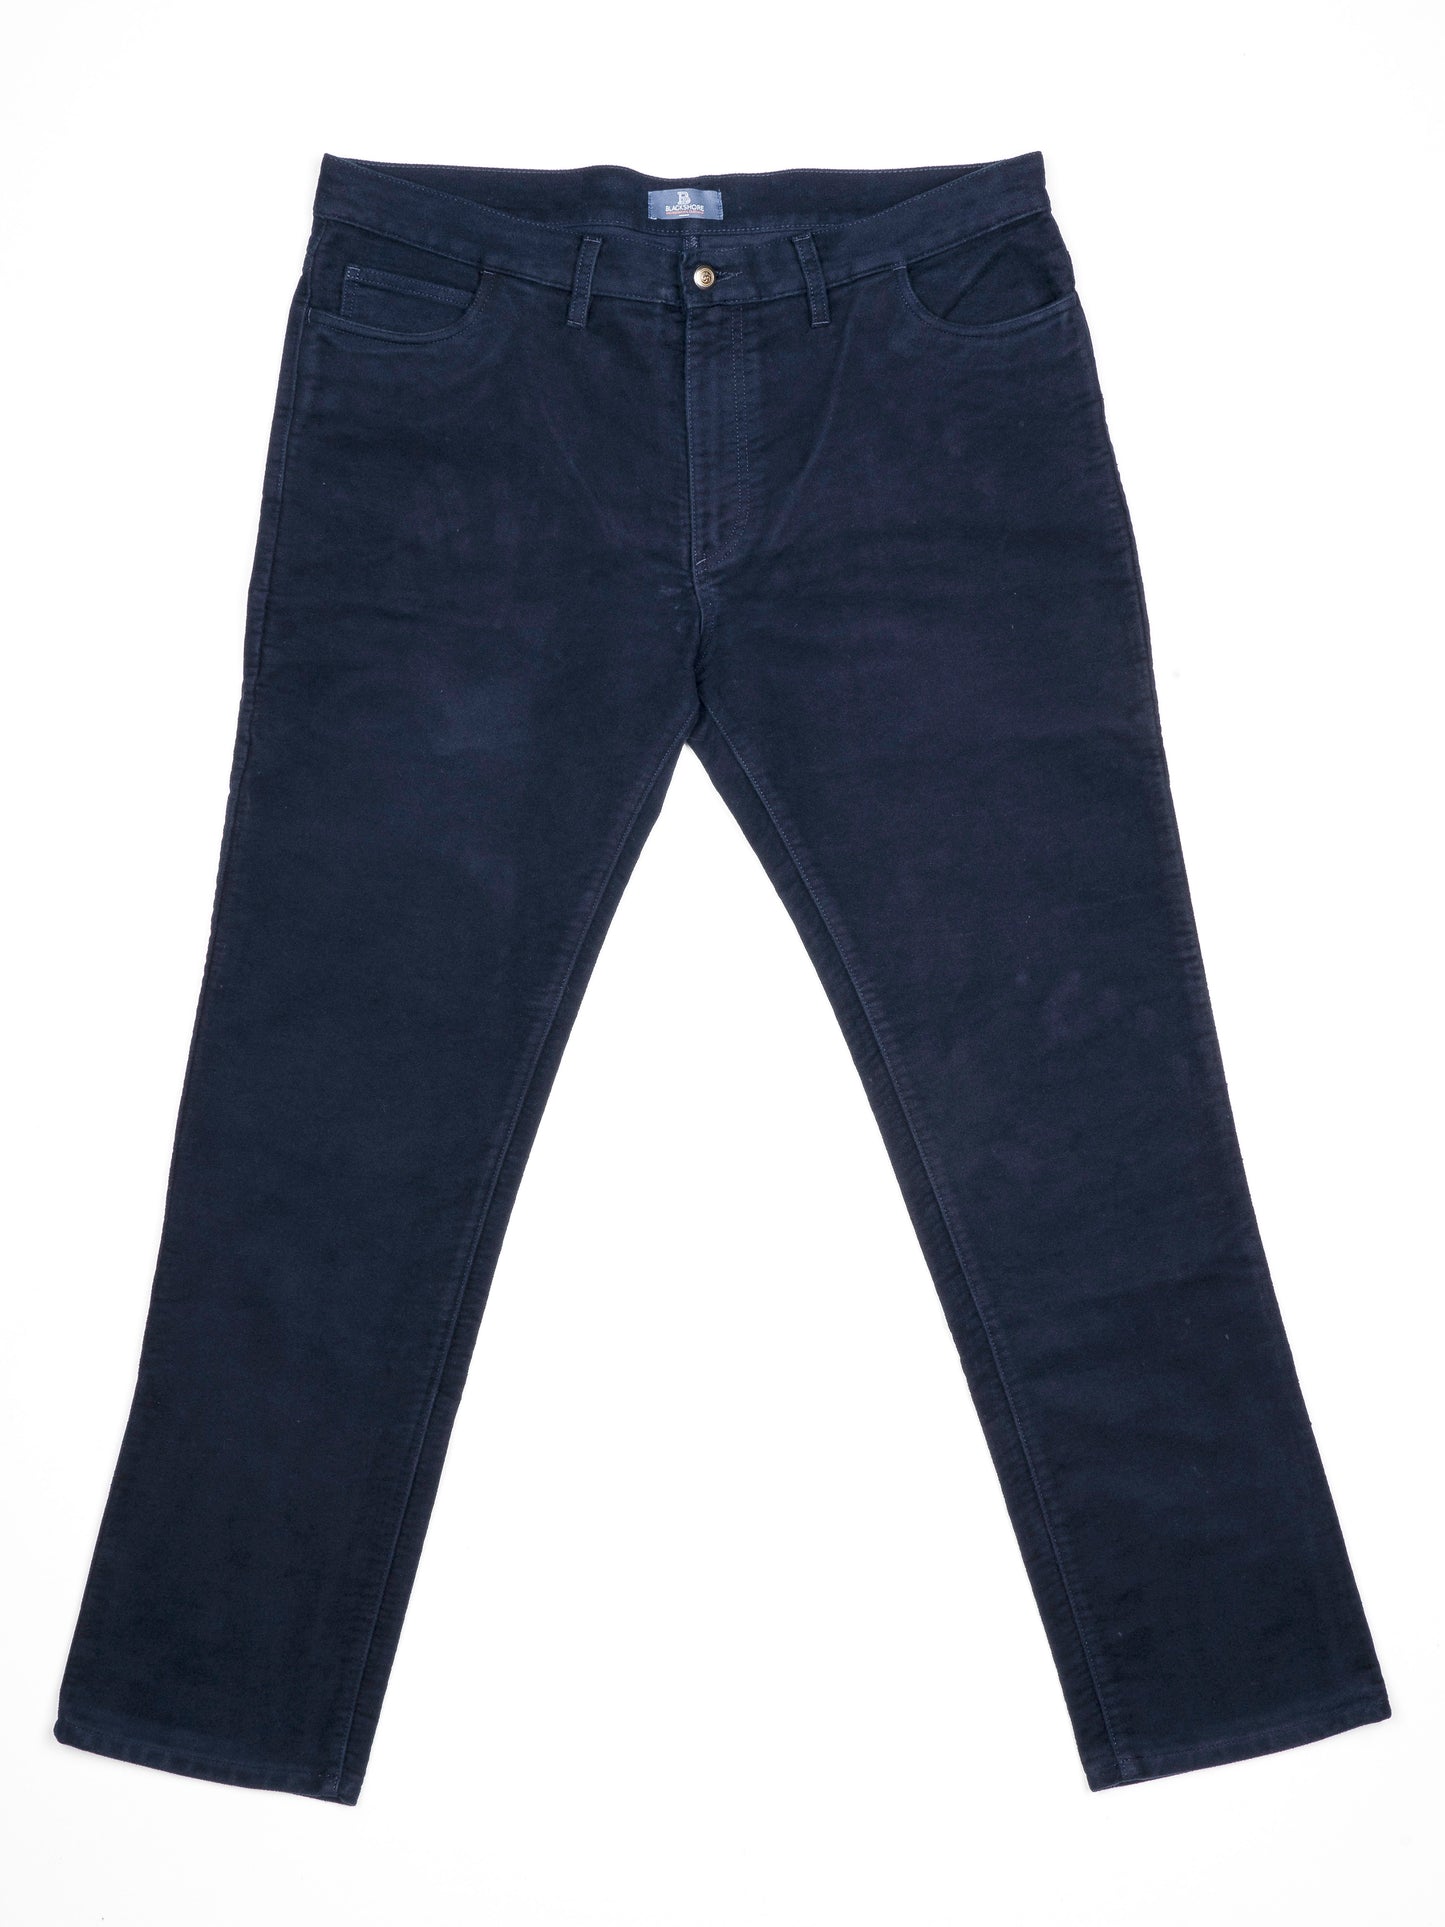 Blackshore Moleskin Jeans